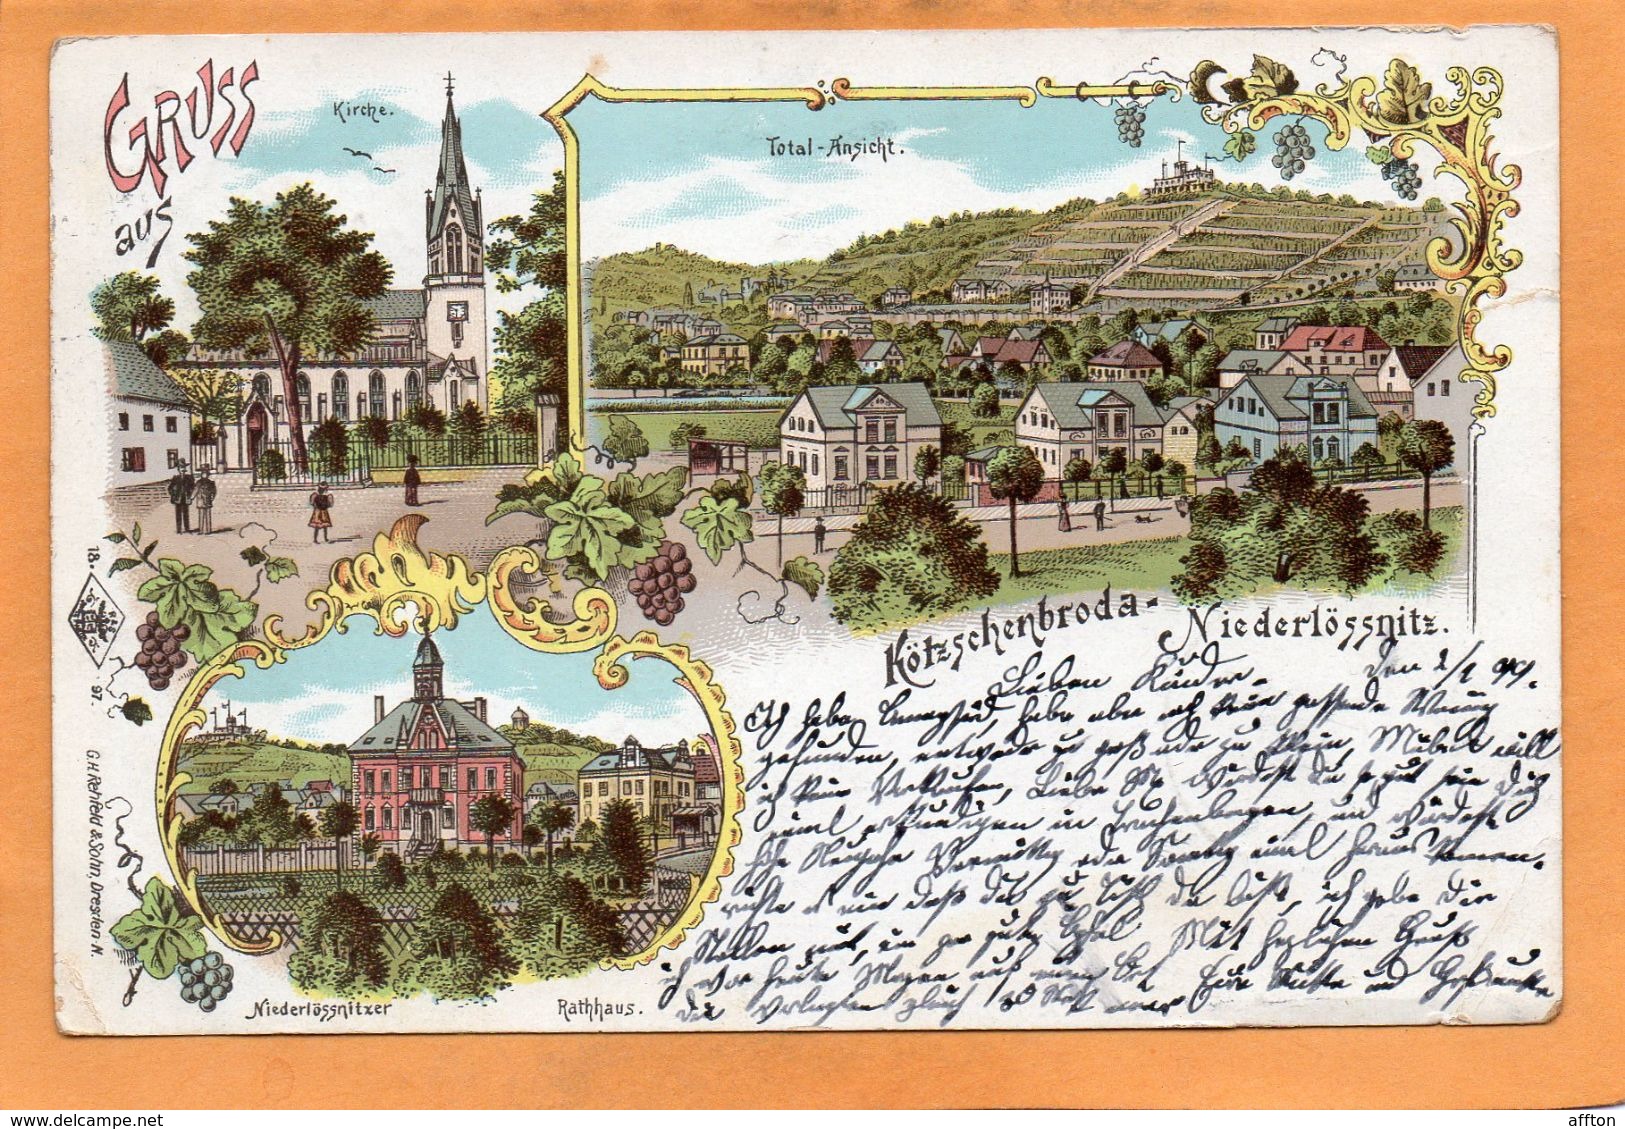 Gruss Aus  Kotzschenbroda Niederlossnitz Germany 1899 Postcard - Nossen